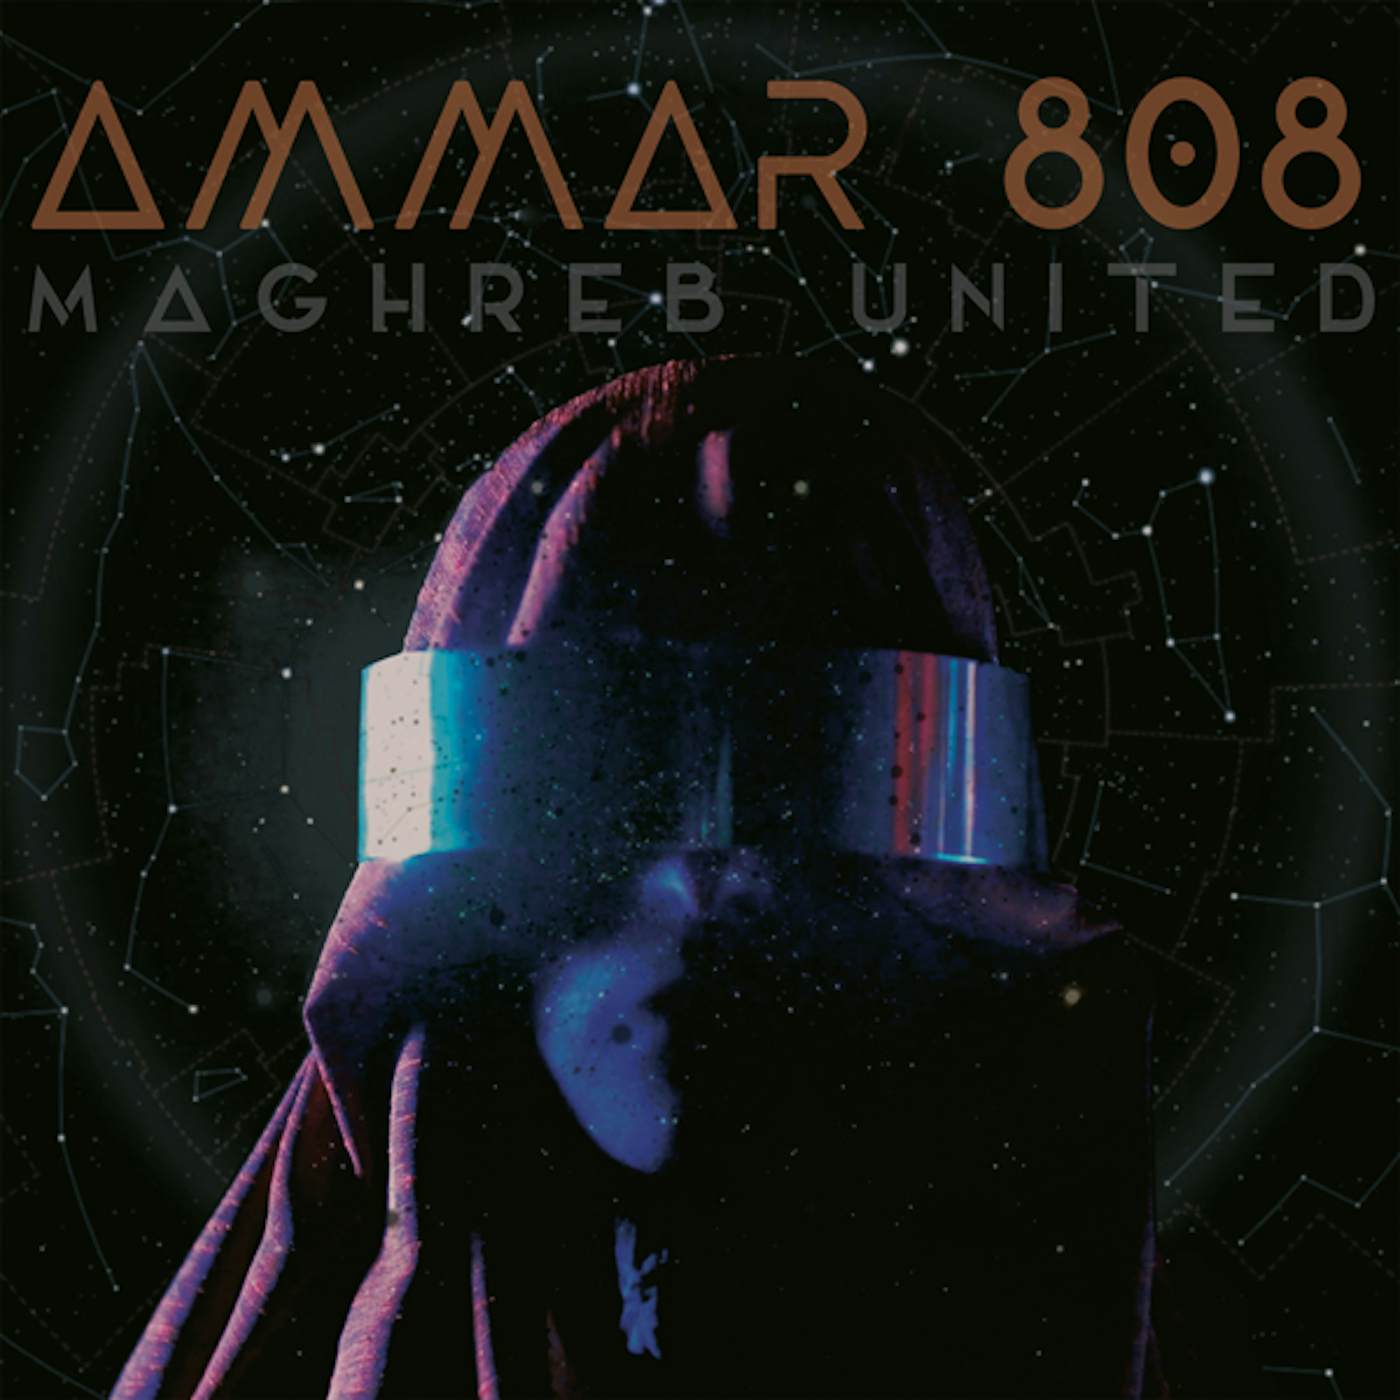 Ammar 808 Maghreb United Vinyl Record